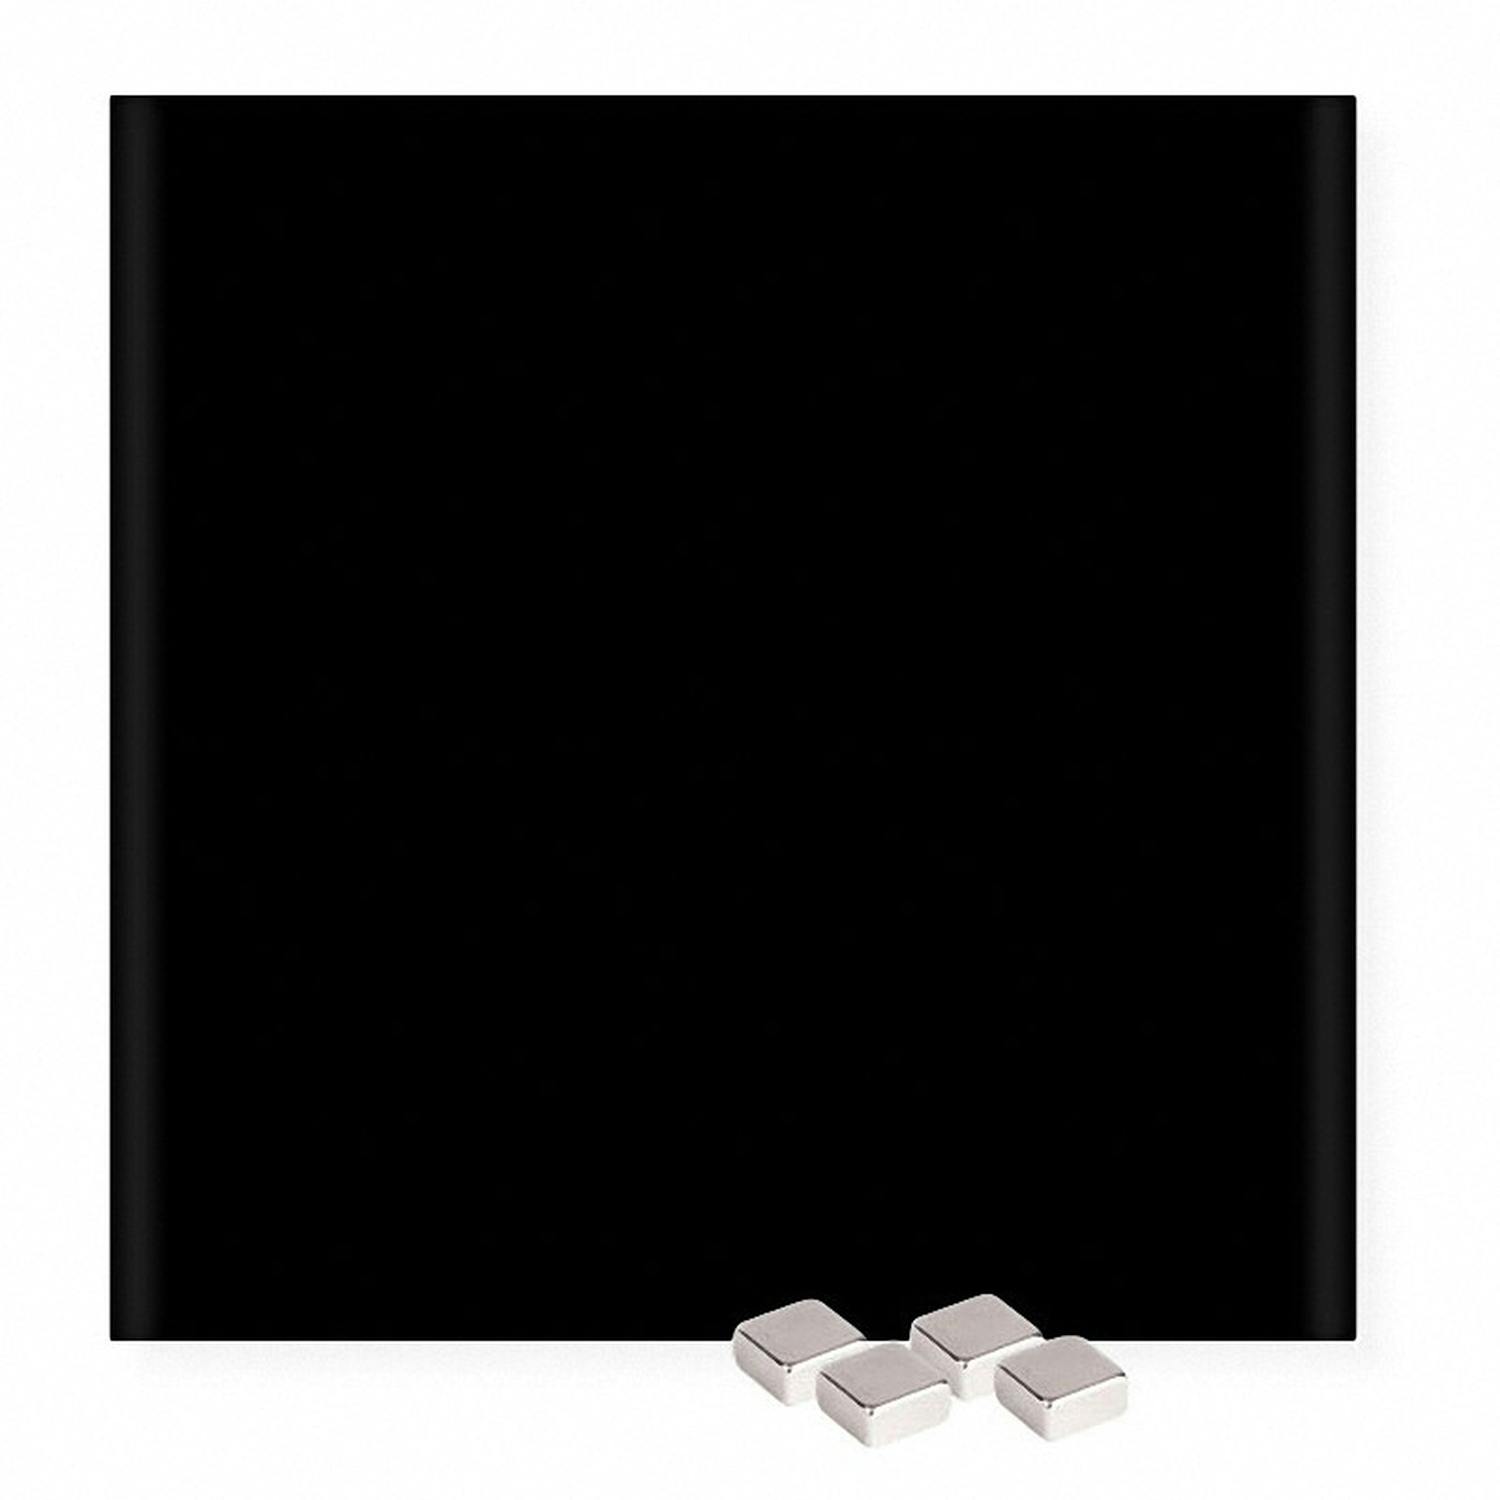 Noord Sophie Bedrog 1x Glasboard magneetbord memobord magnetisch krasvast 45 x 45 cm zwart |  MAKRO Webshop